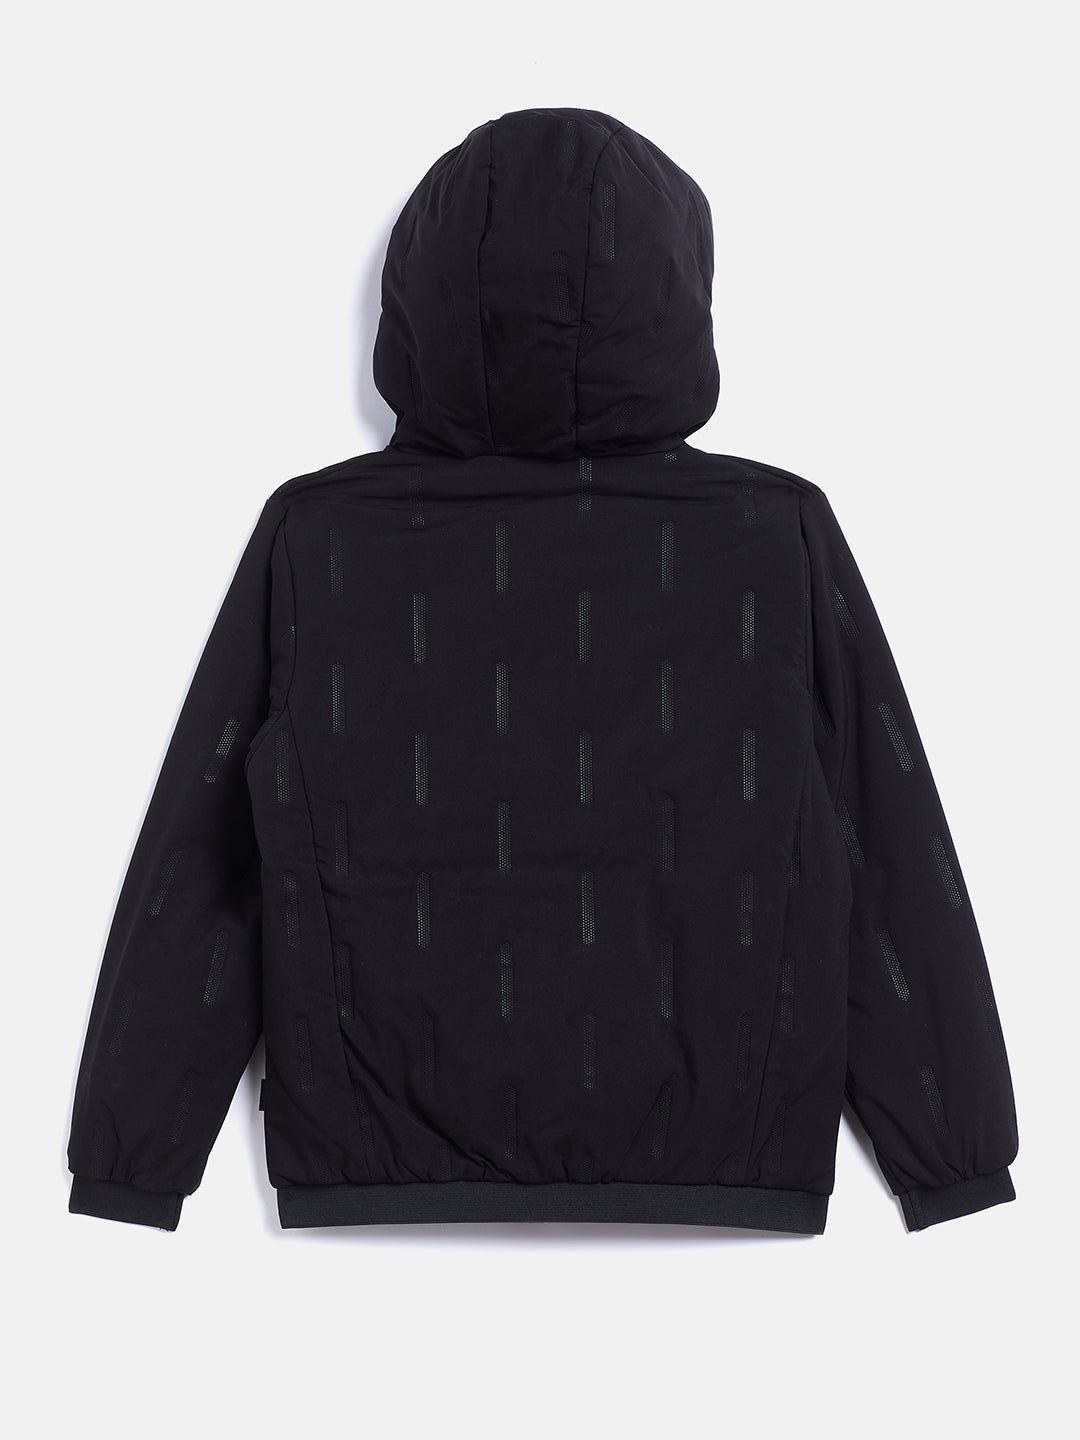 Black Printed Hooded Jacket - Boys Jacket